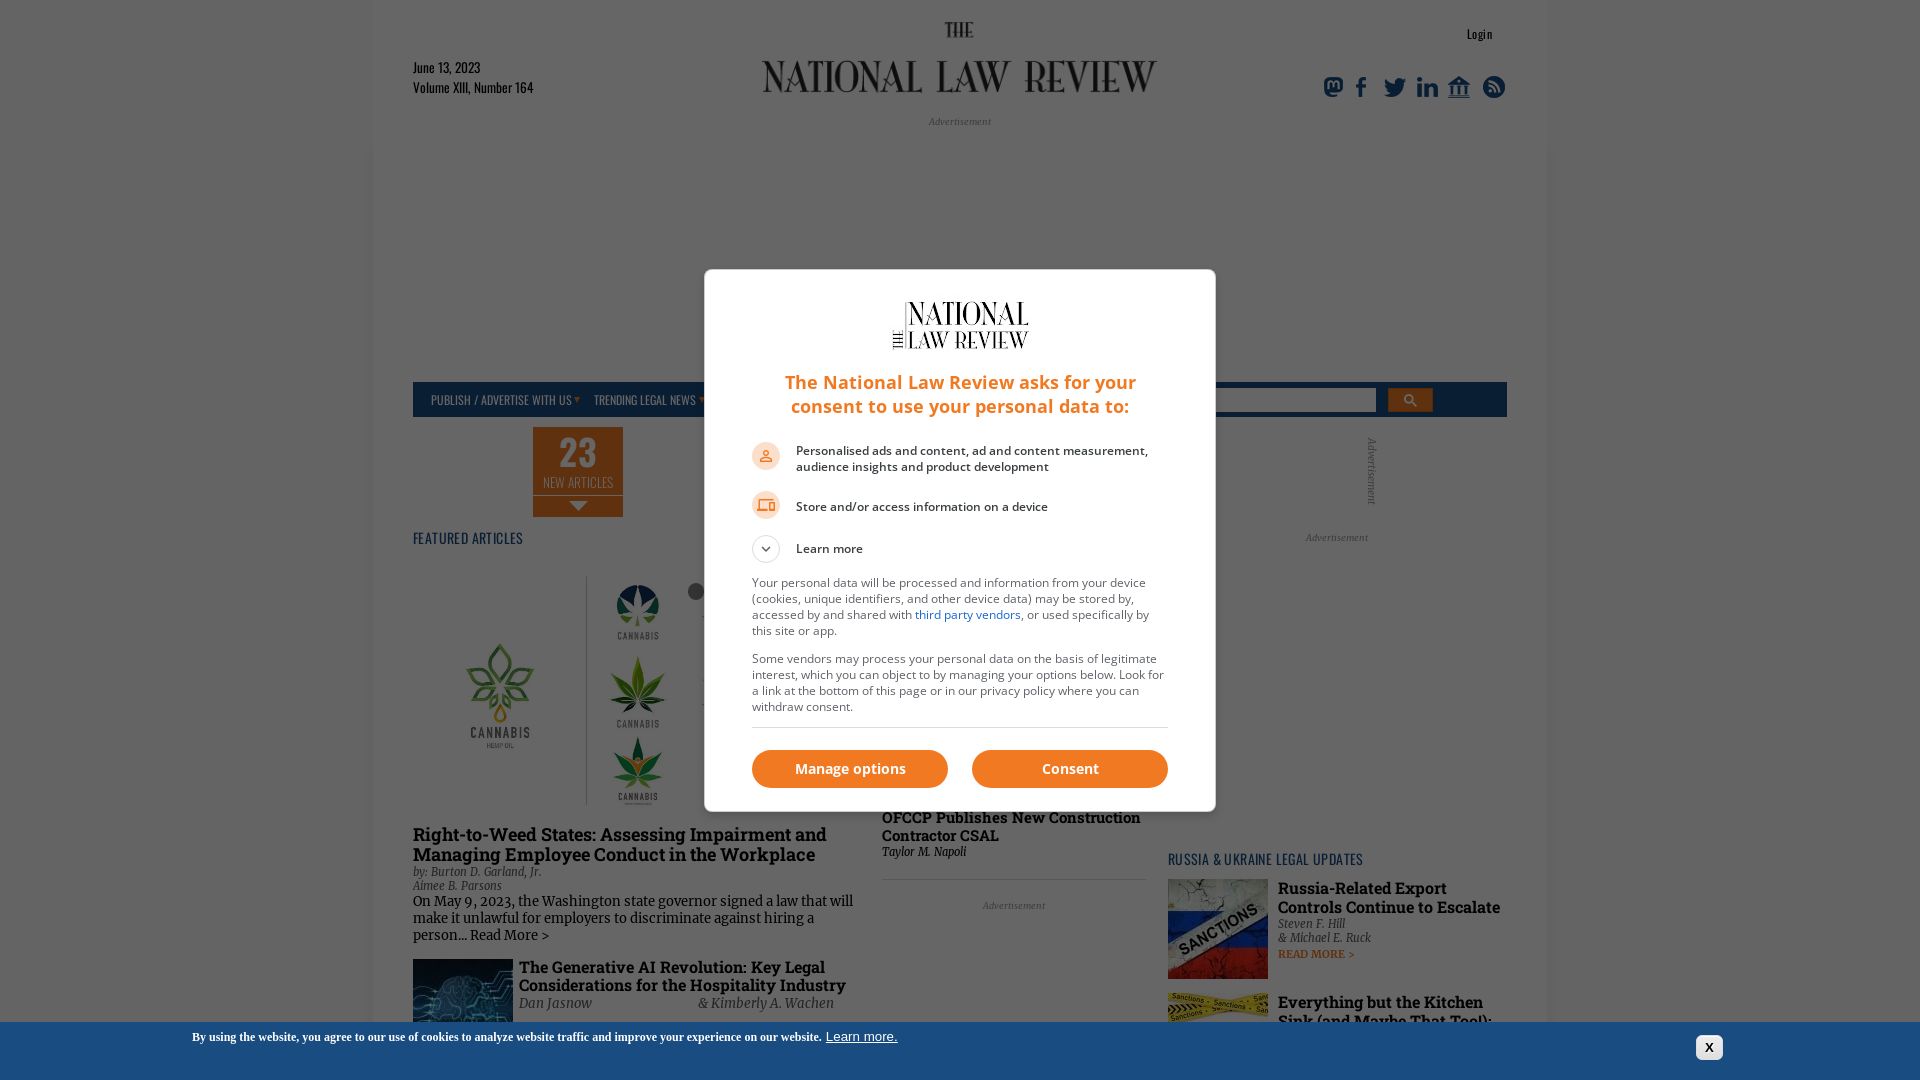 Website status natlawreview.com is   ONLINE